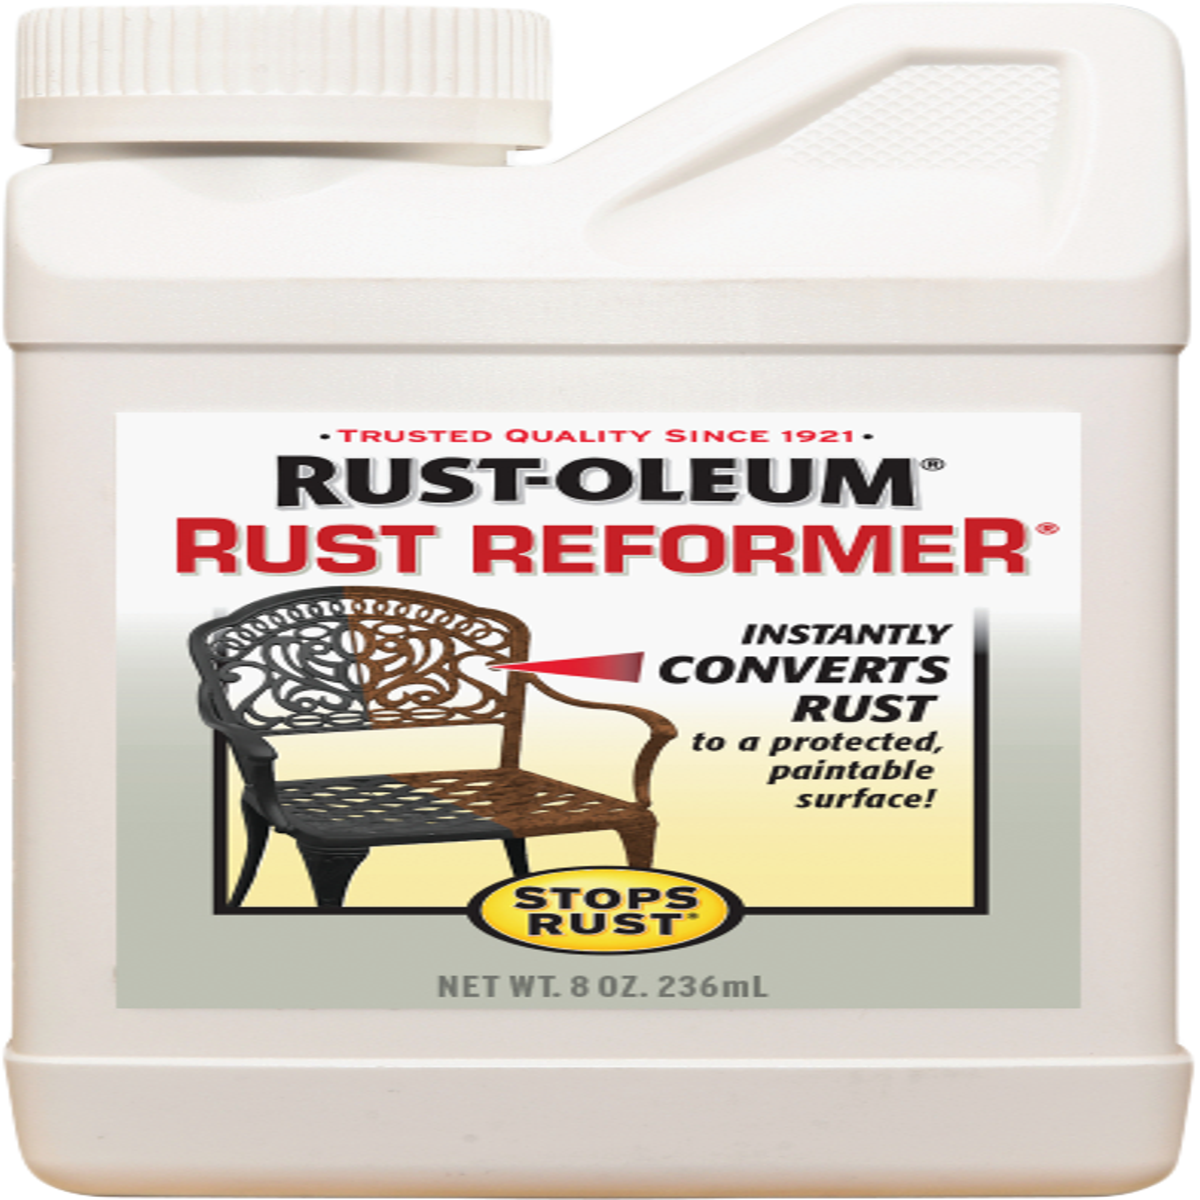 Rust Control Paints & Treatments